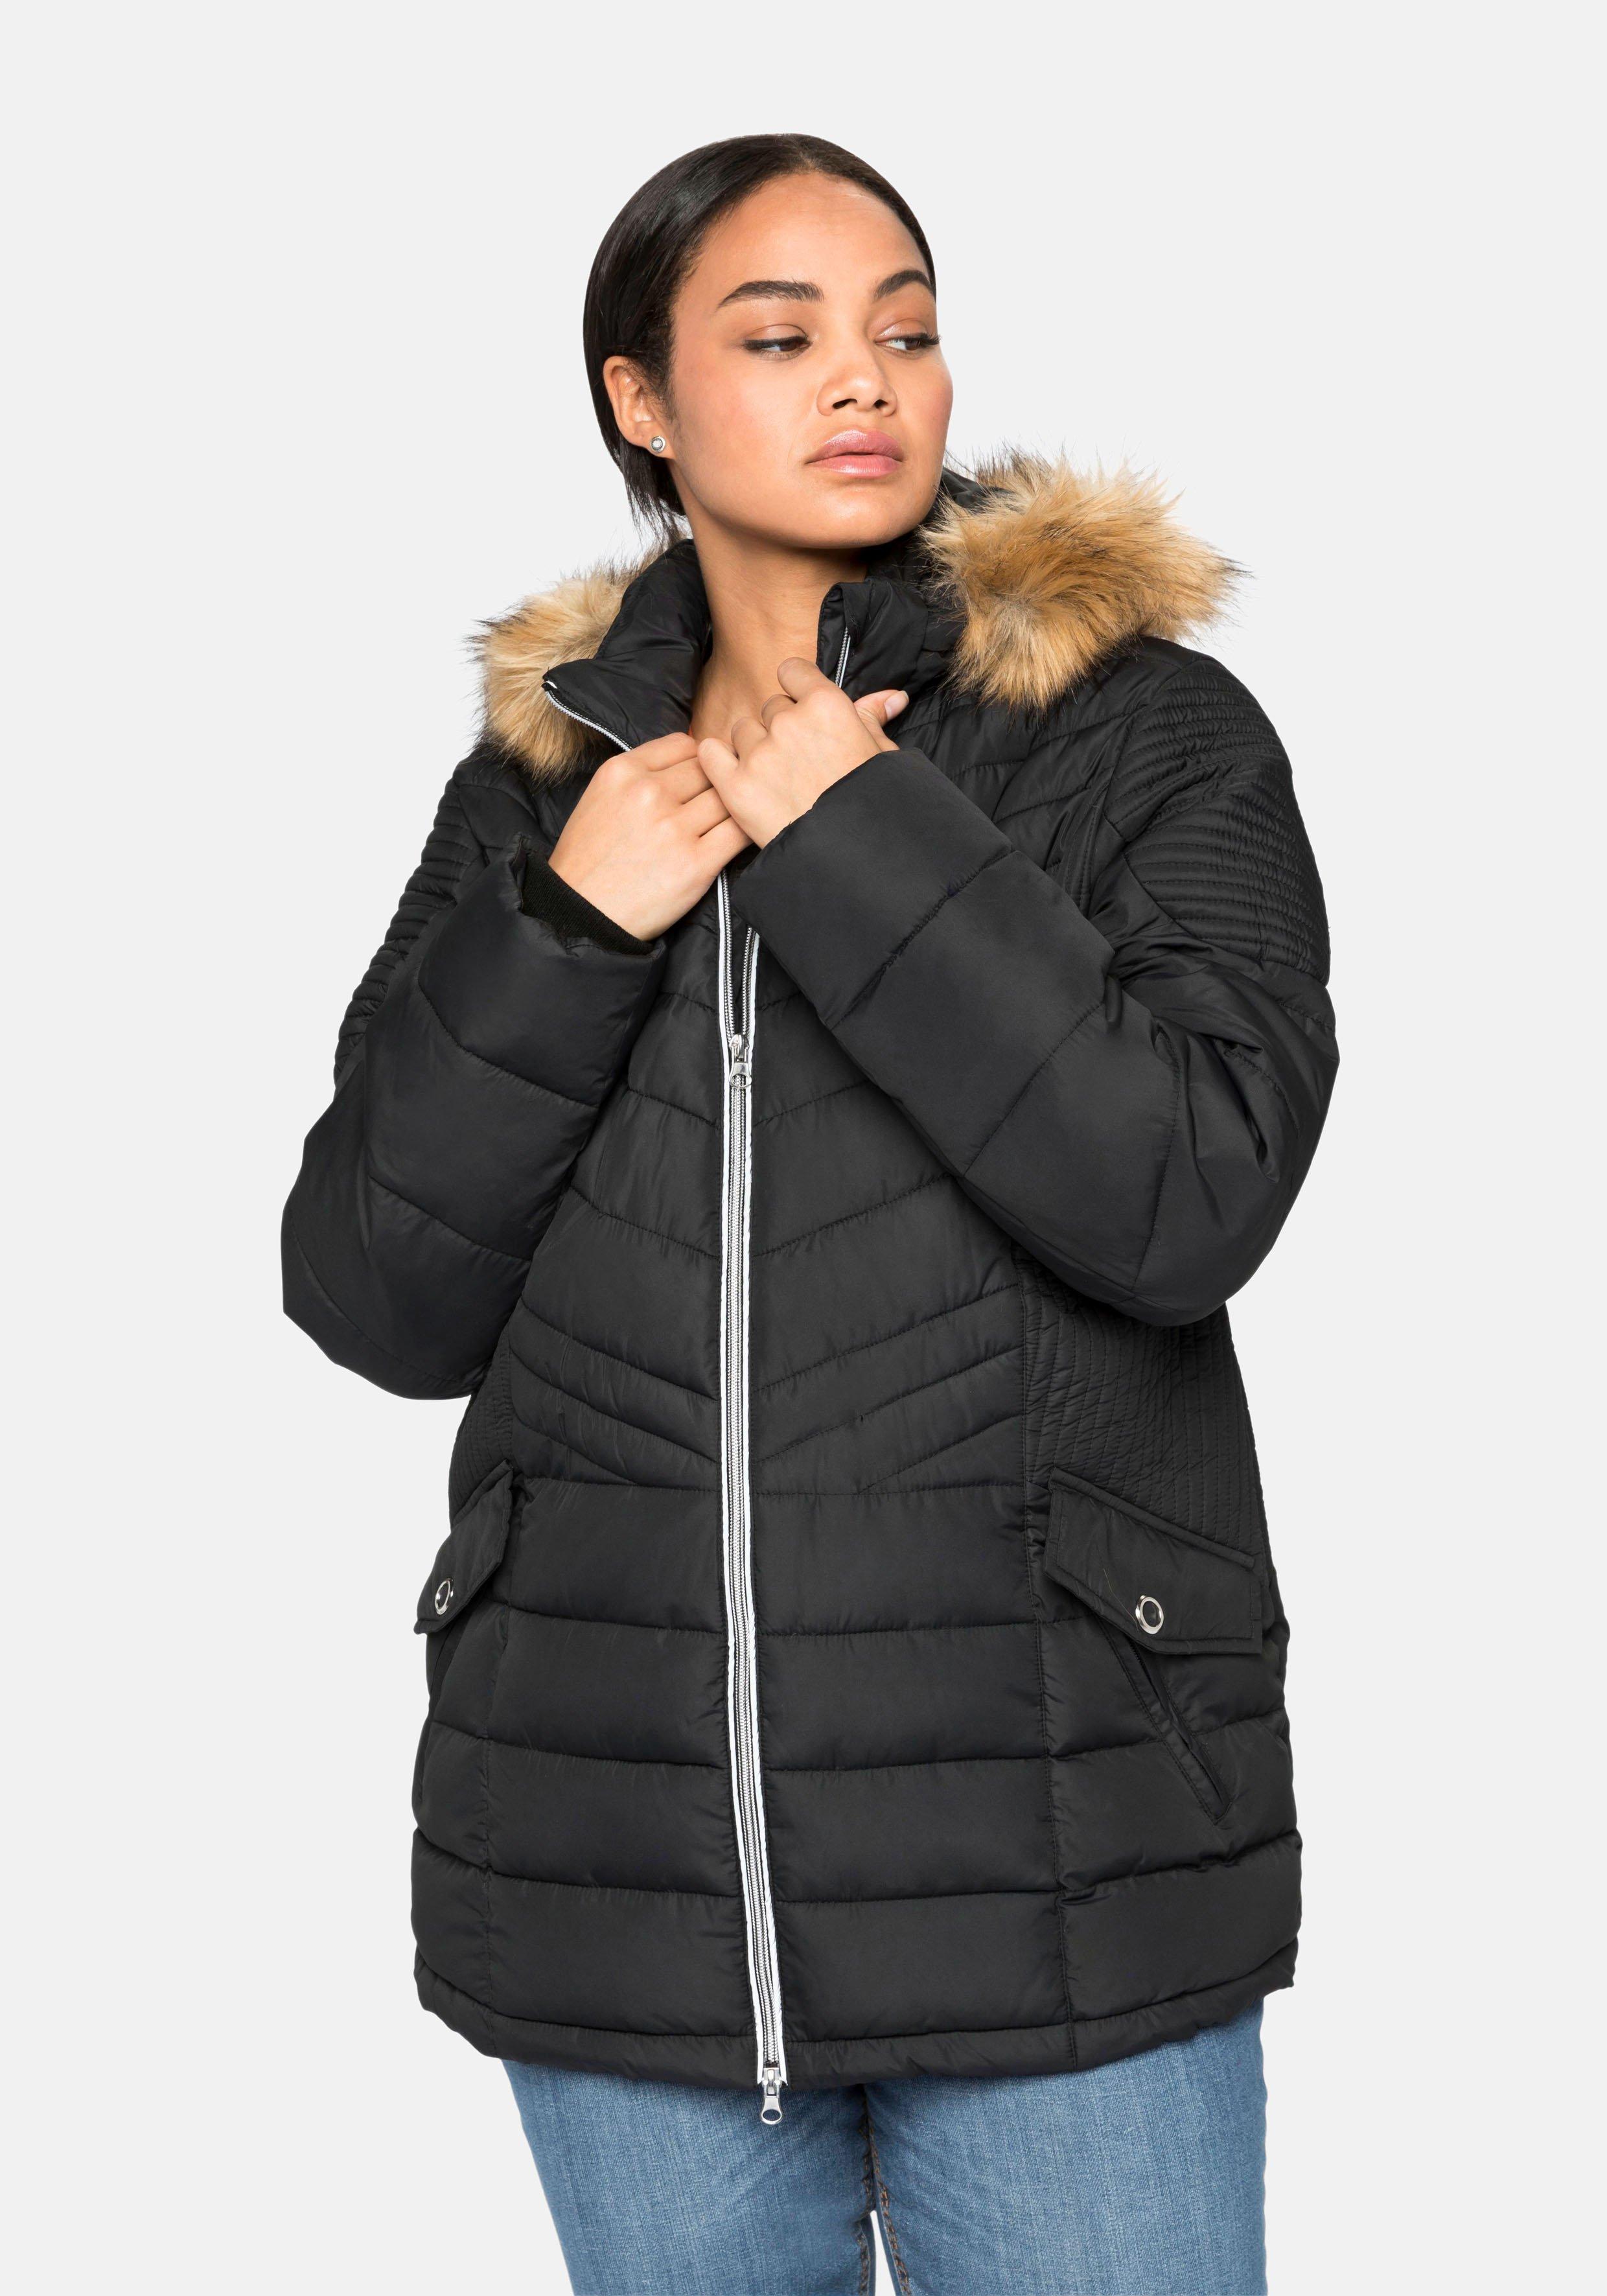 Damen Jacken & Mäntel große Größen › Größe 46 | sheego ♥ Plus Size Mode | Kurzmäntel